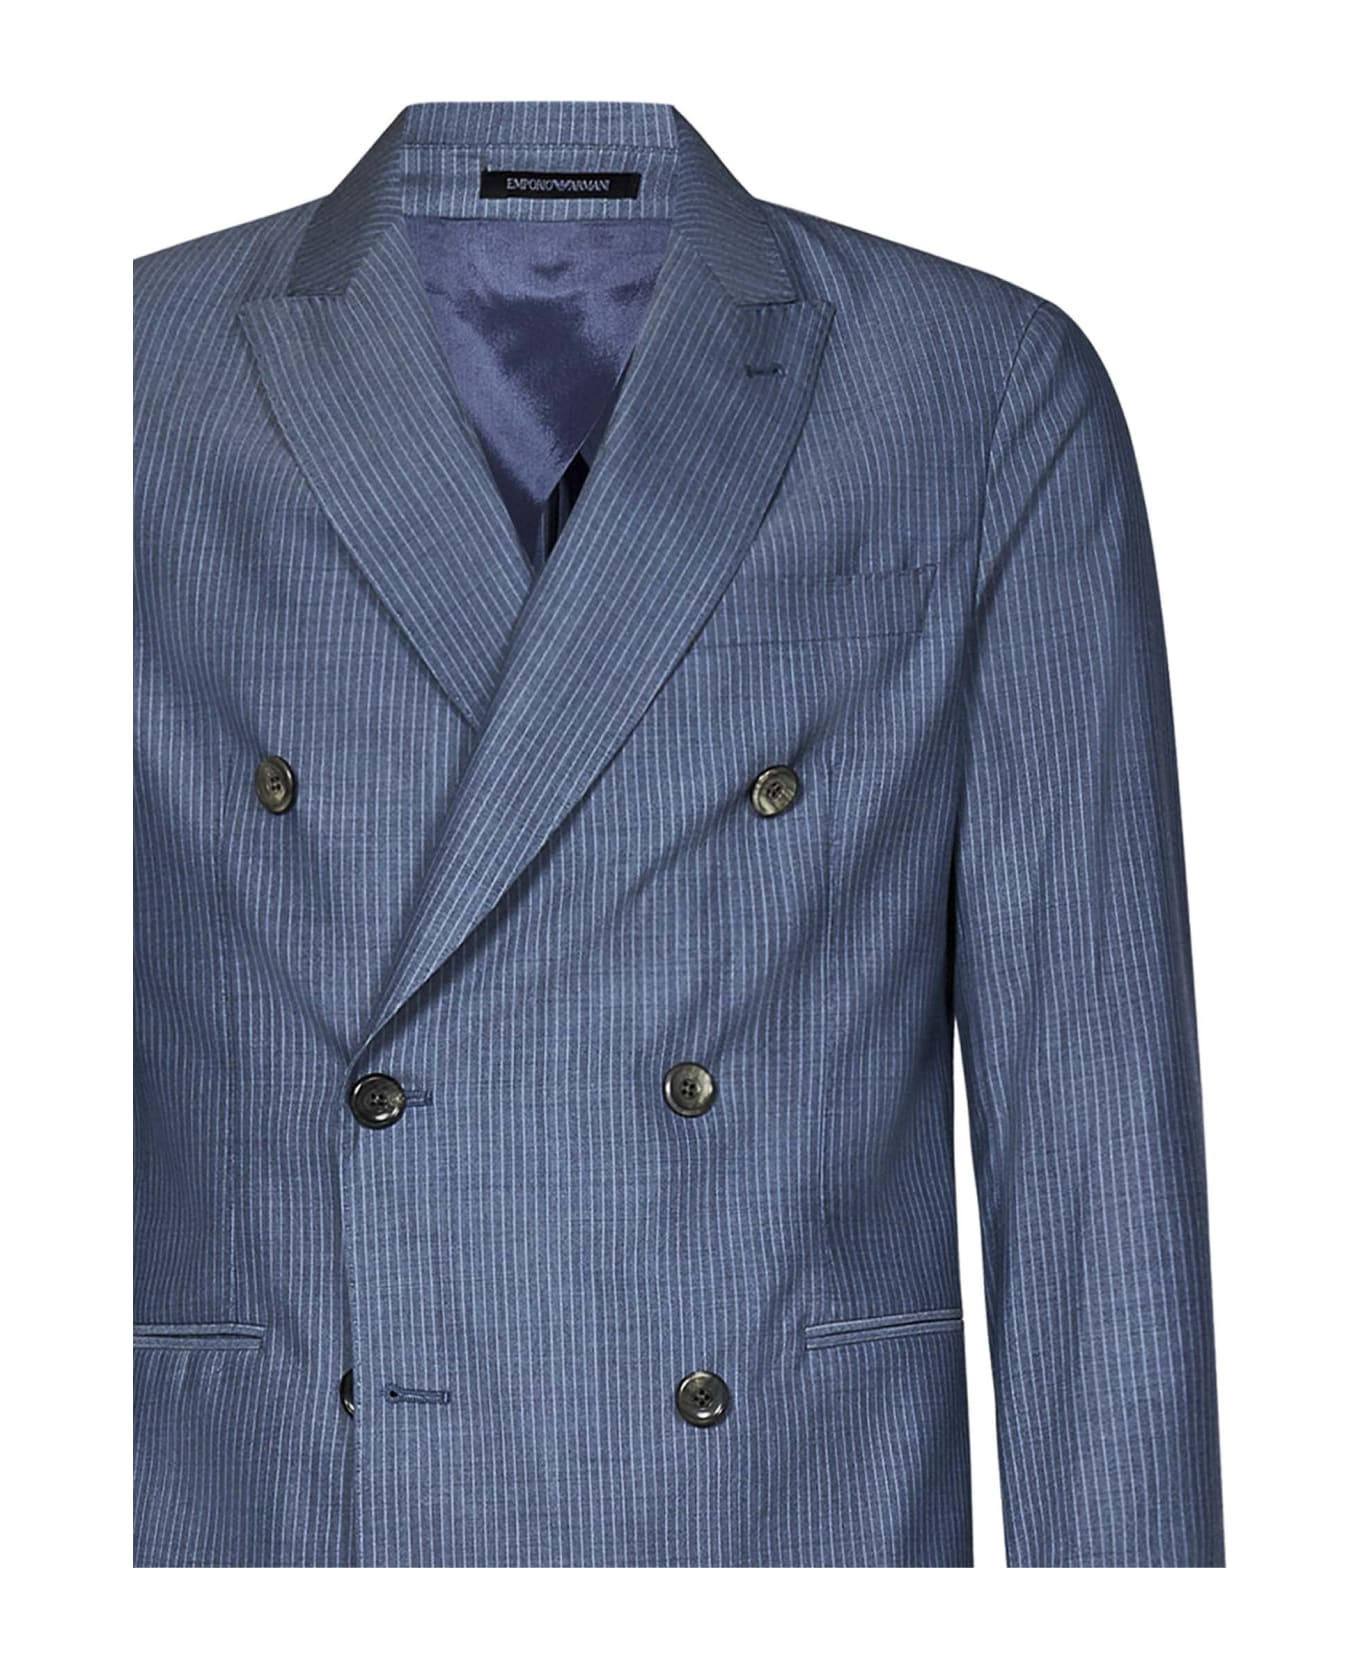 Emporio Armani Suit - Clear Blue